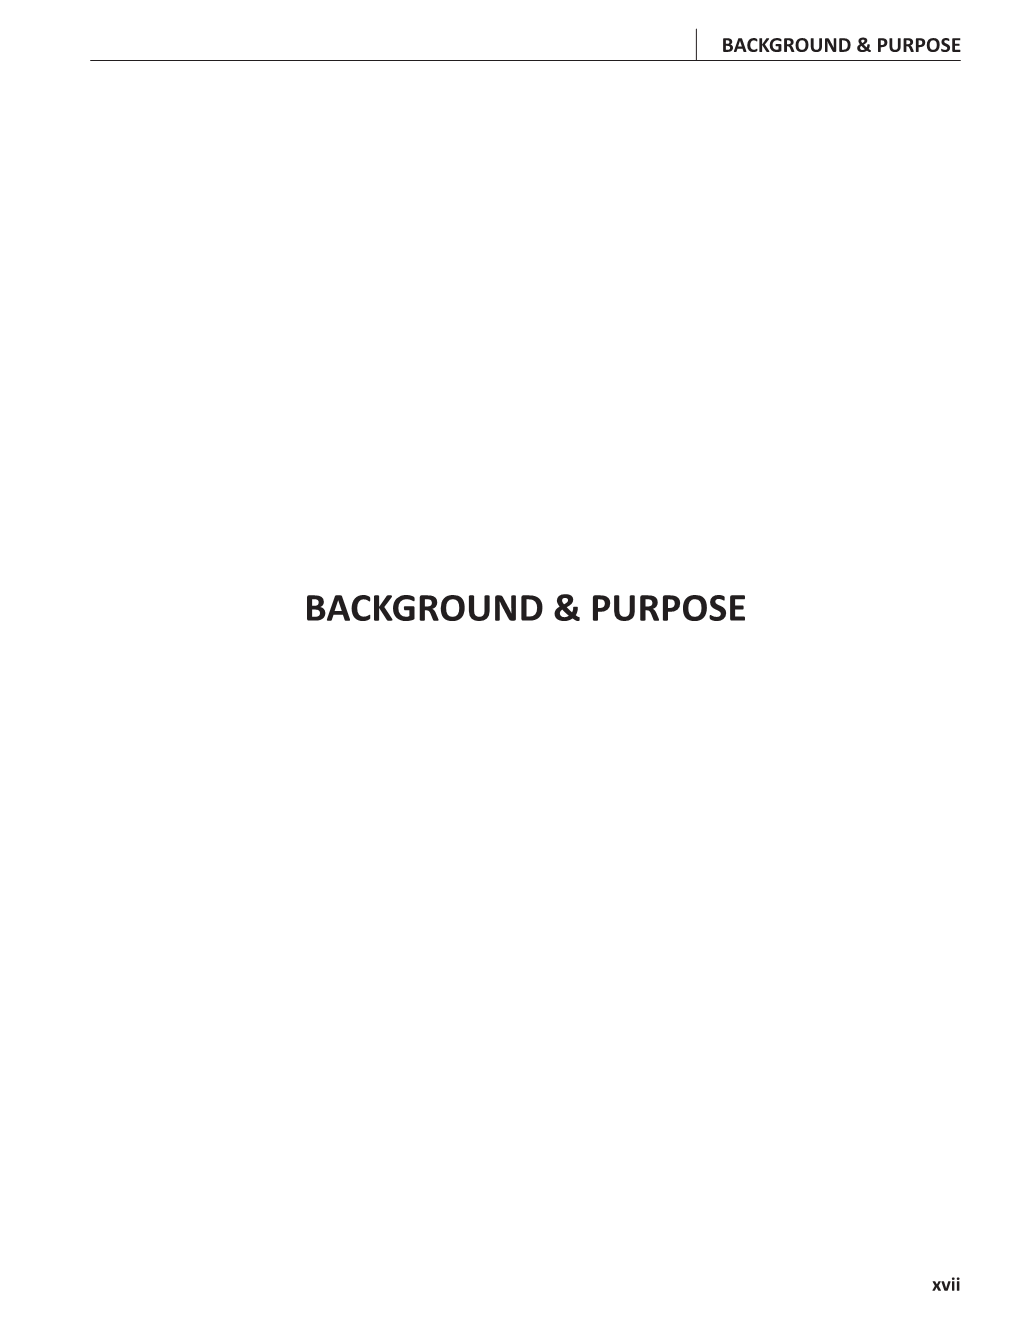 Background & Purpose